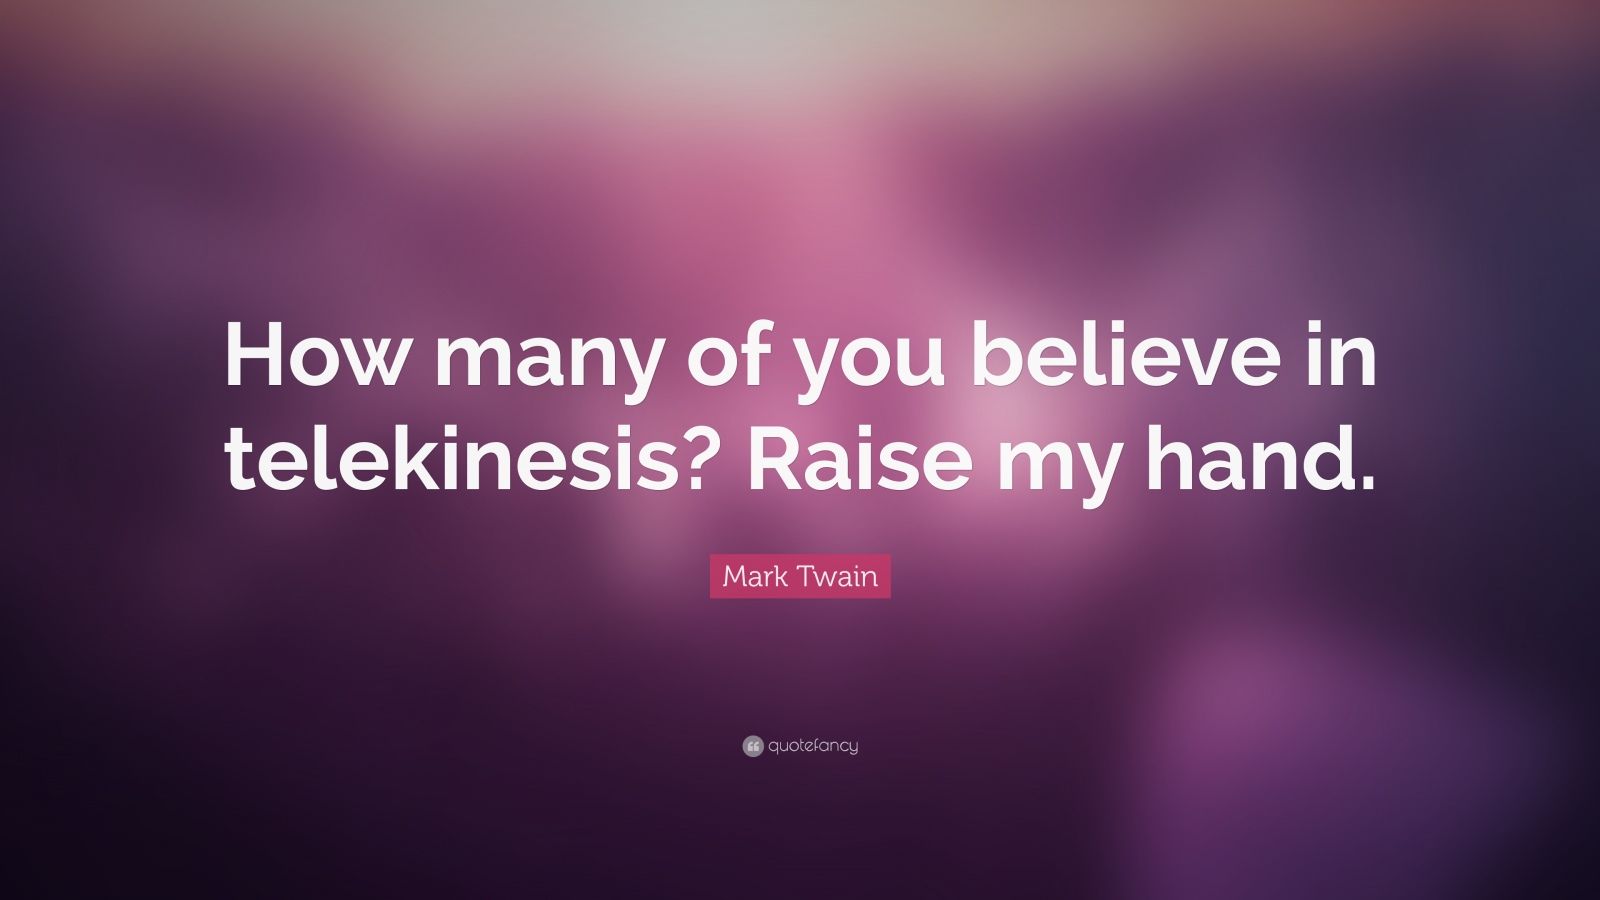 Mark Twain Quote: “How many of you believe in telekinesis? Raise